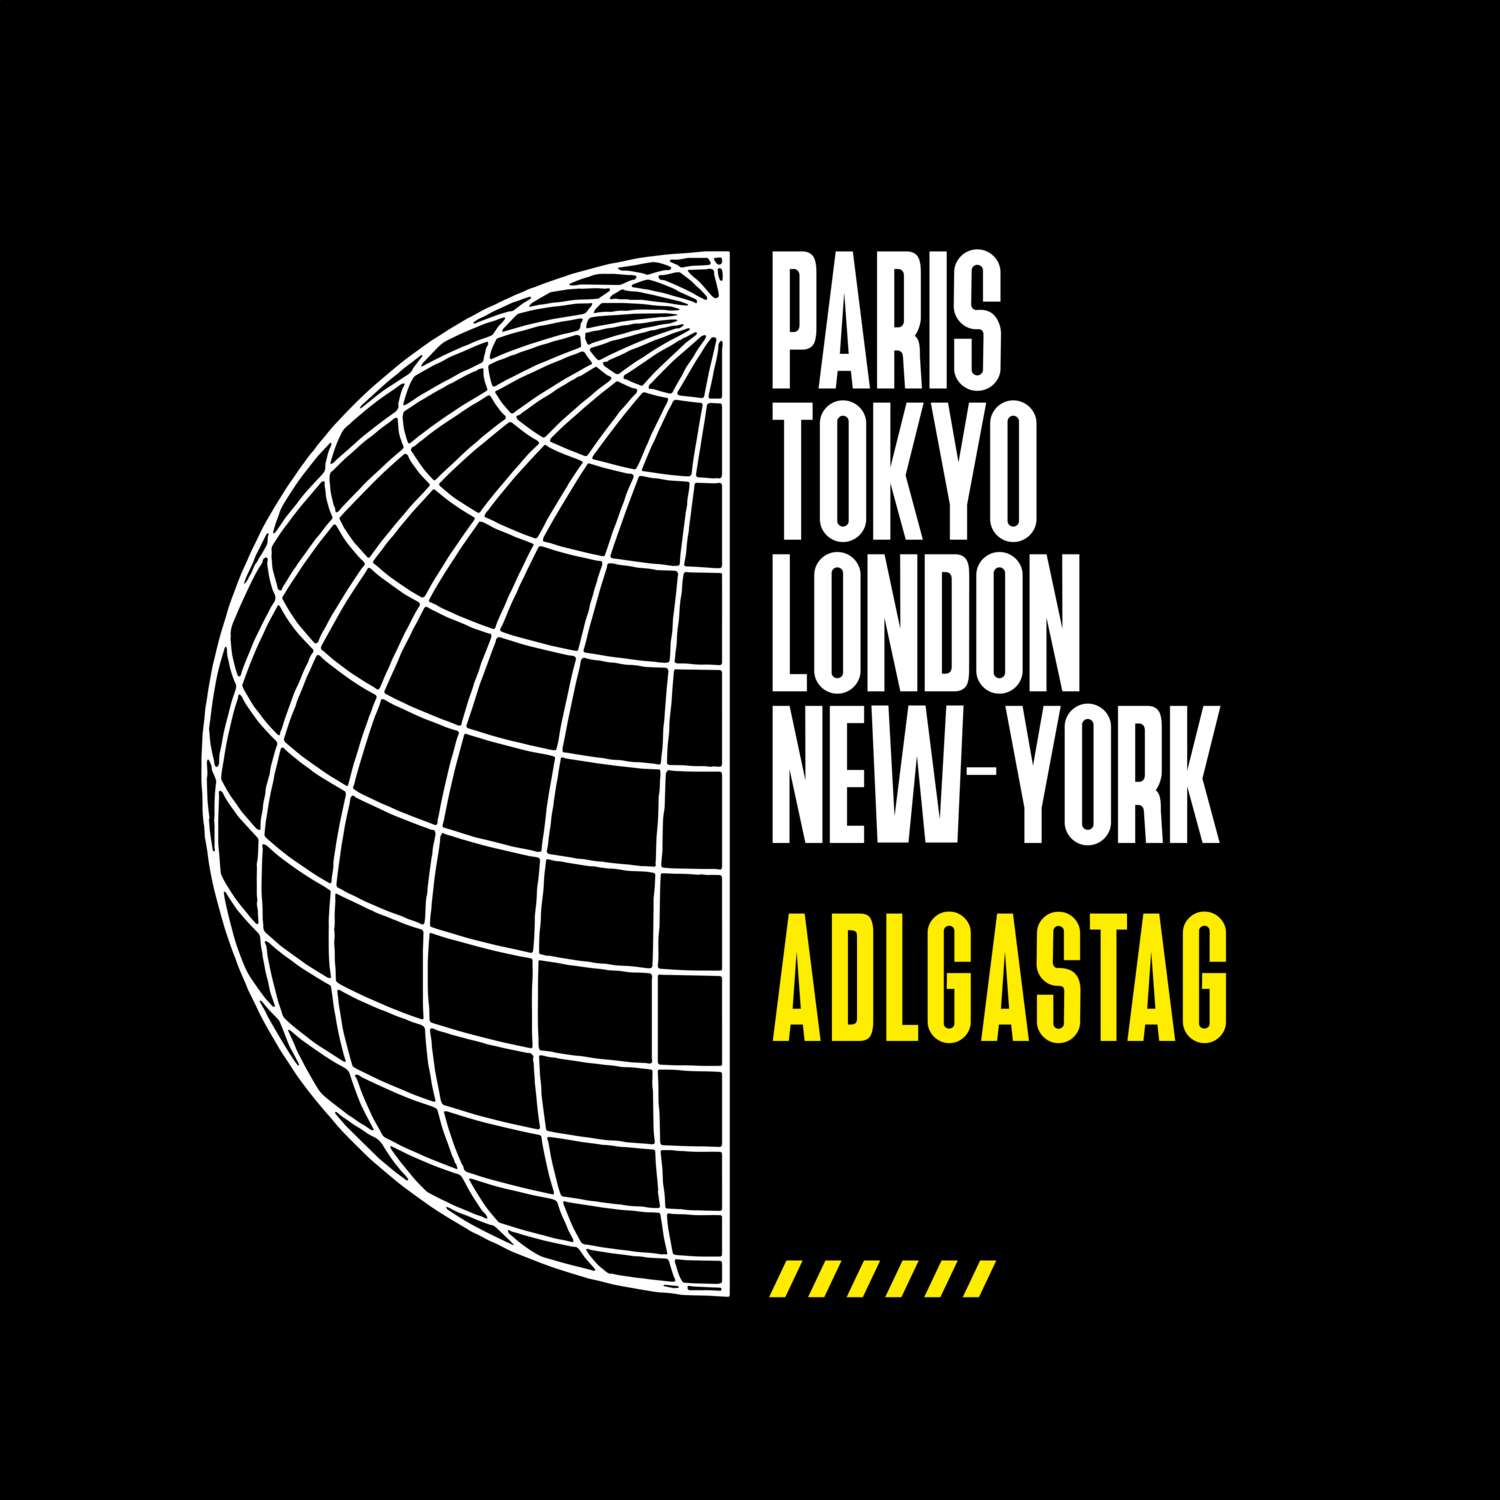 Adlgastag T-Shirt »Paris Tokyo London«